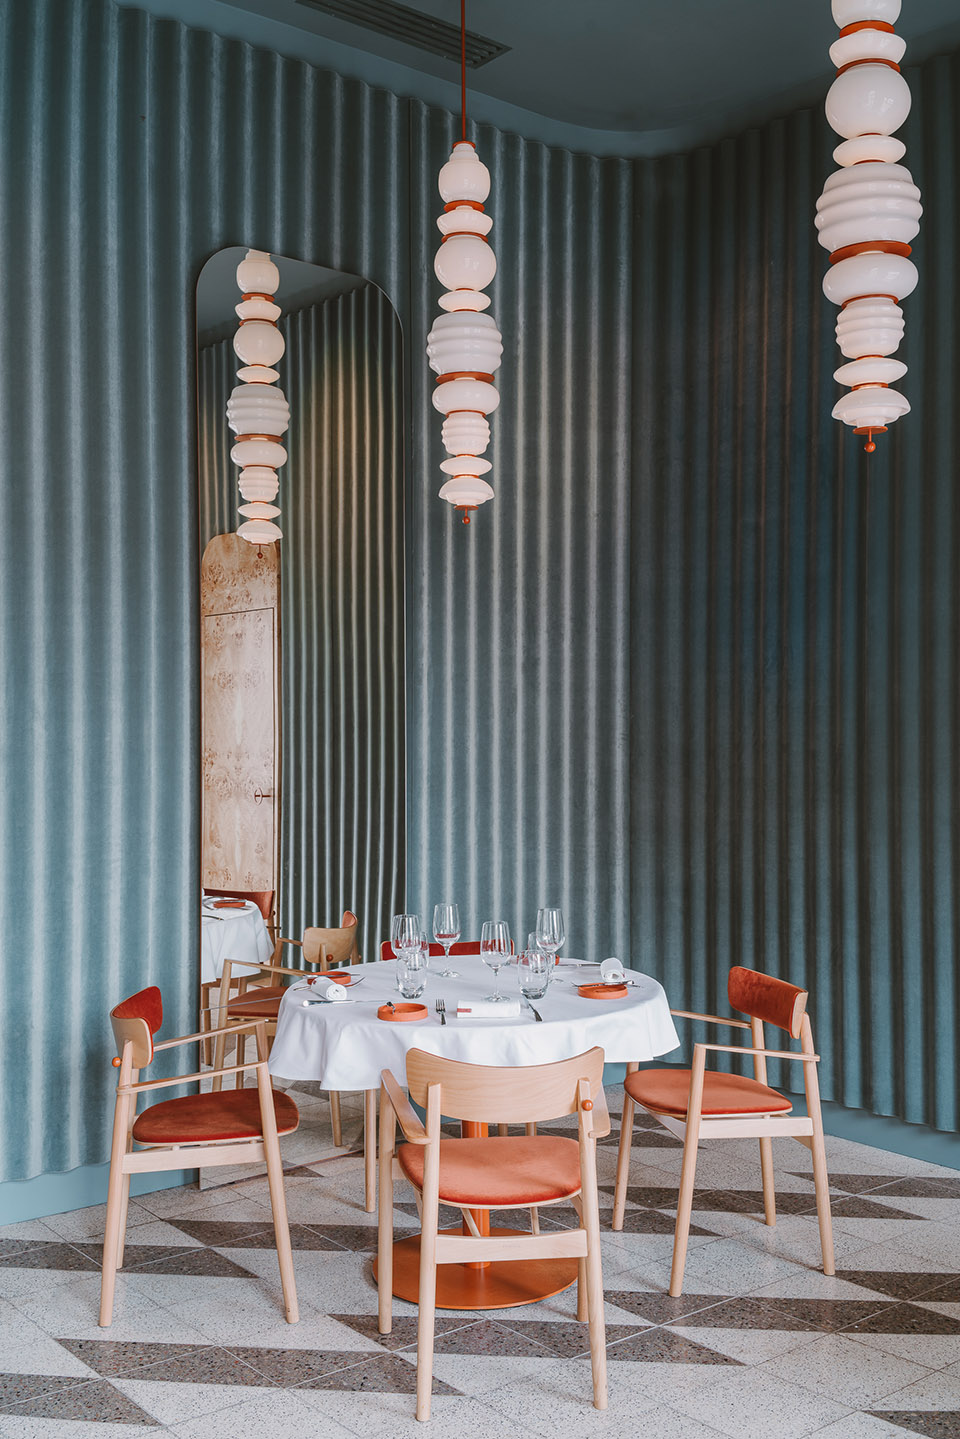 OPASLY TOM餐厅，华沙/丰富的色彩、饰面和纹理空间下的用餐体验-73